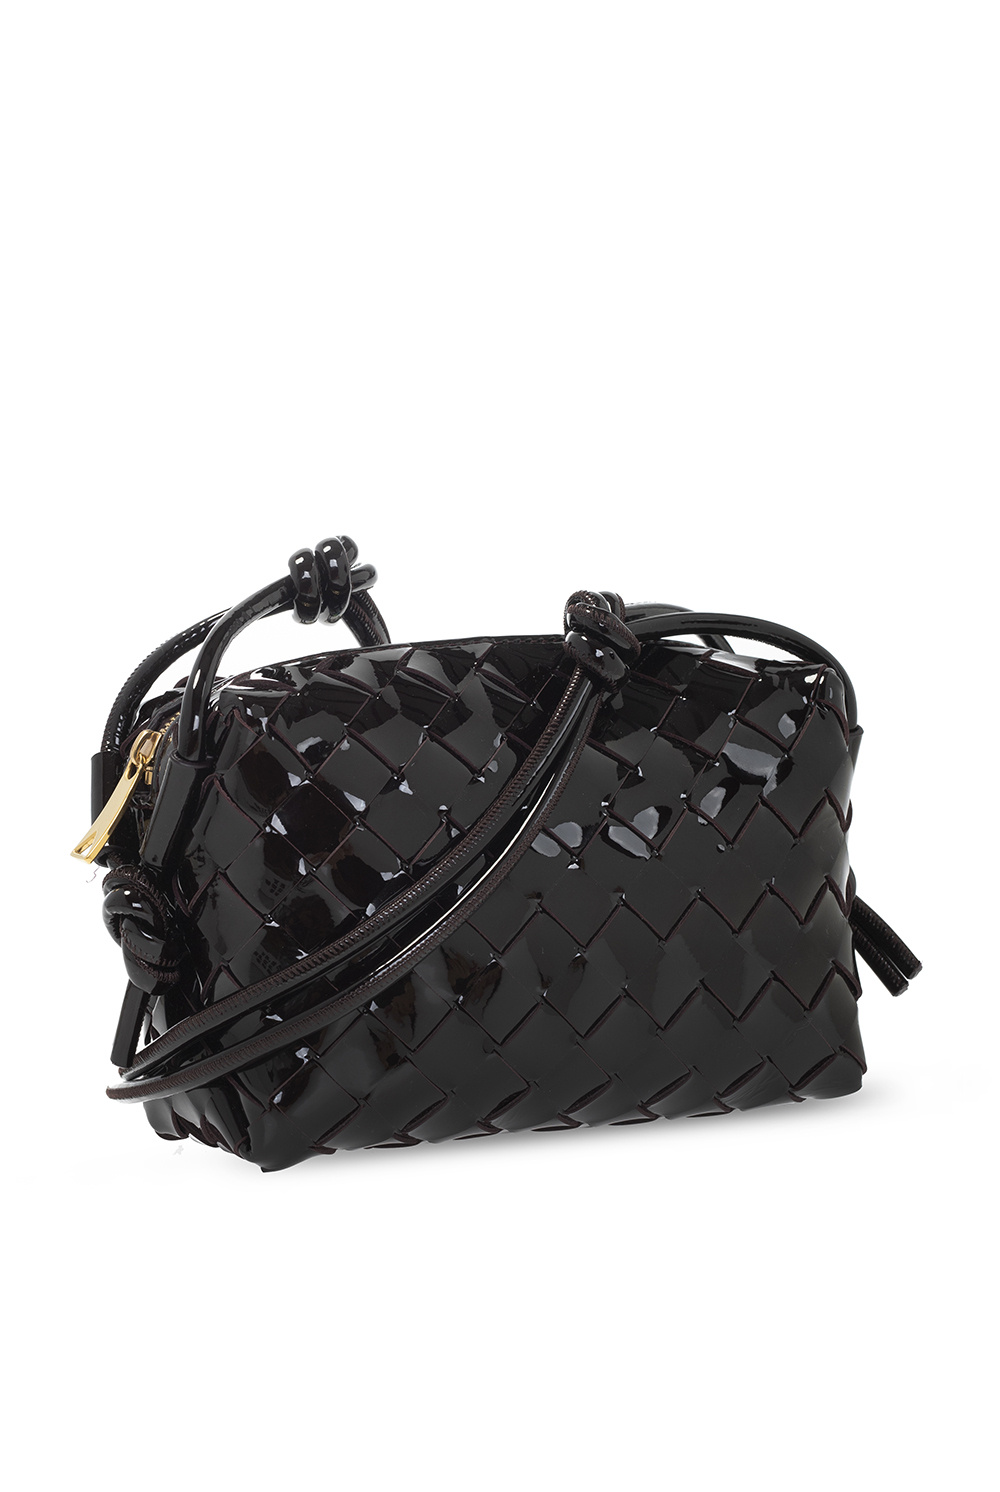 Bottega Veneta Mini Loop Intrecciato Shoulder Bag Leather Light Brown  680254 Use